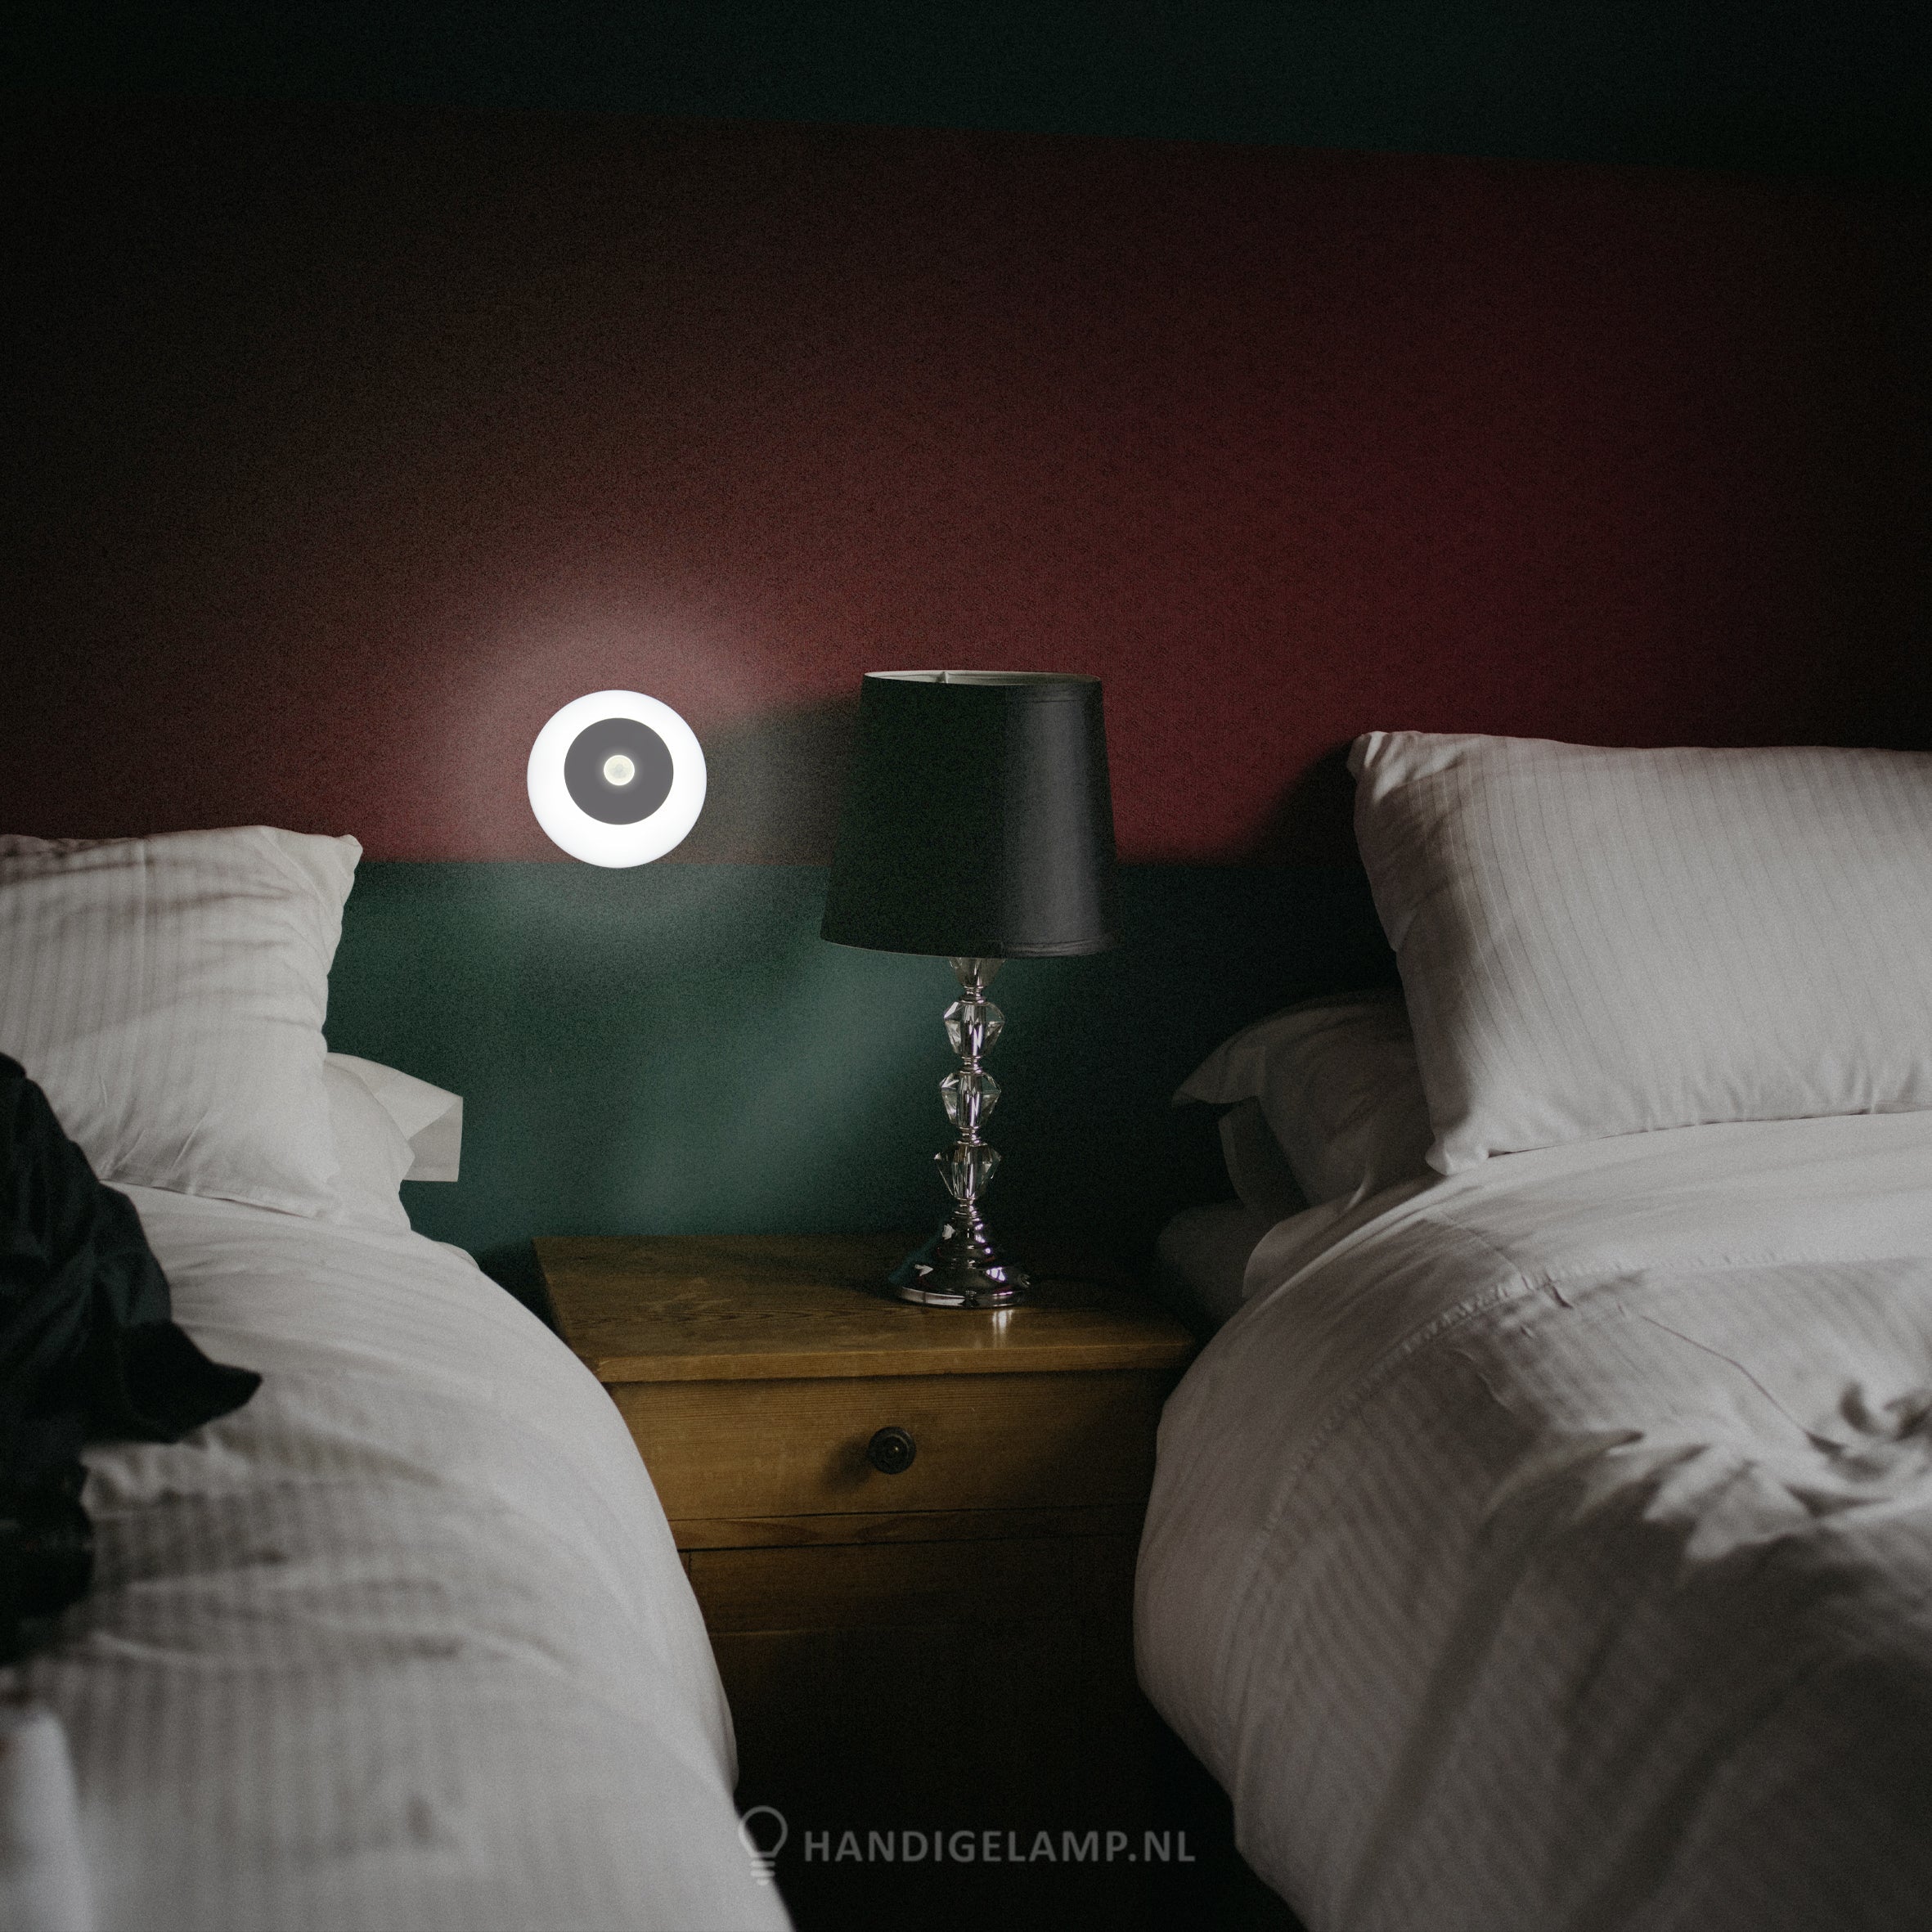 Wireless night light with motion sensor